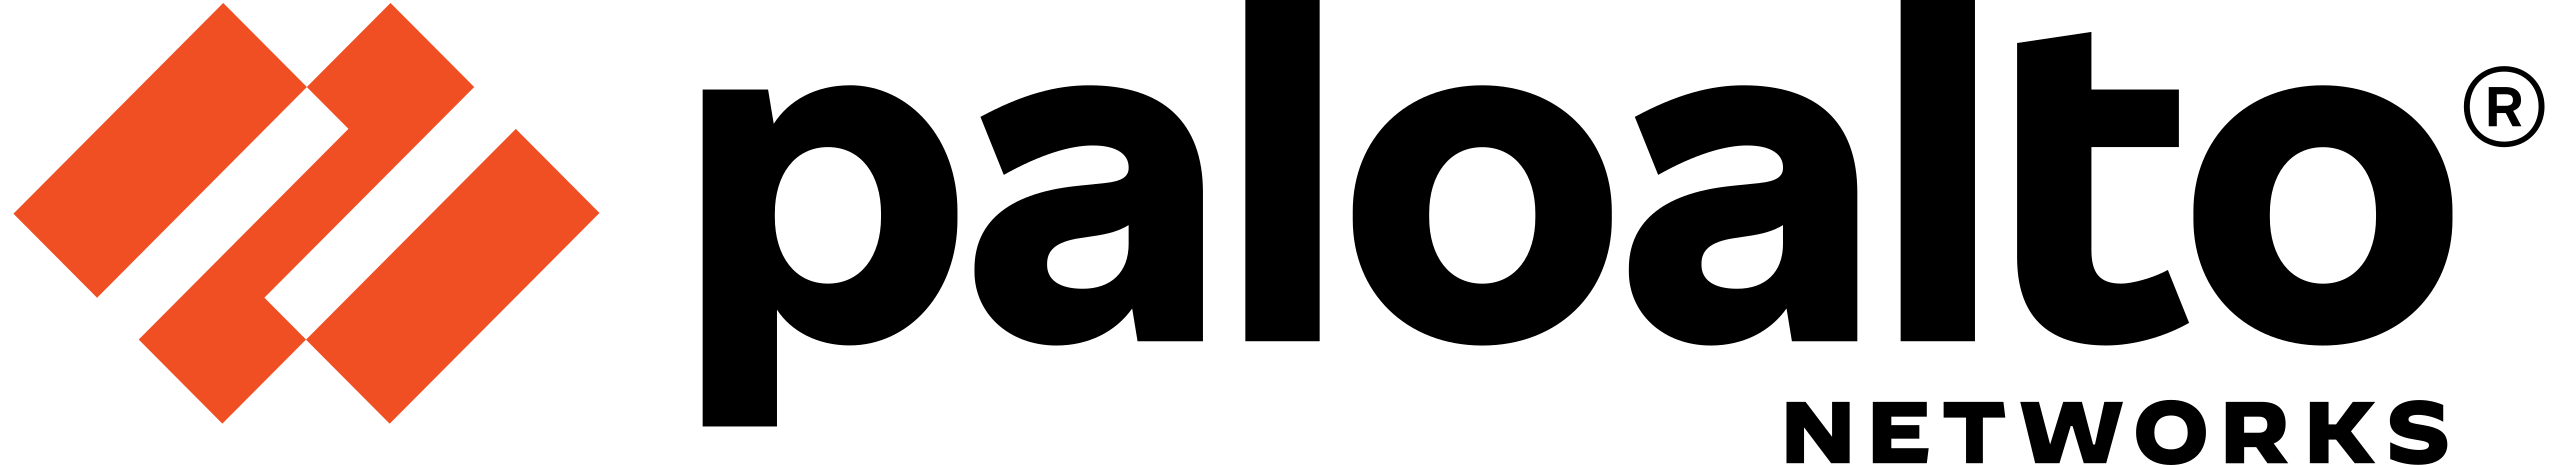 PaloAltoNetworks_2020_Logo.svg-1